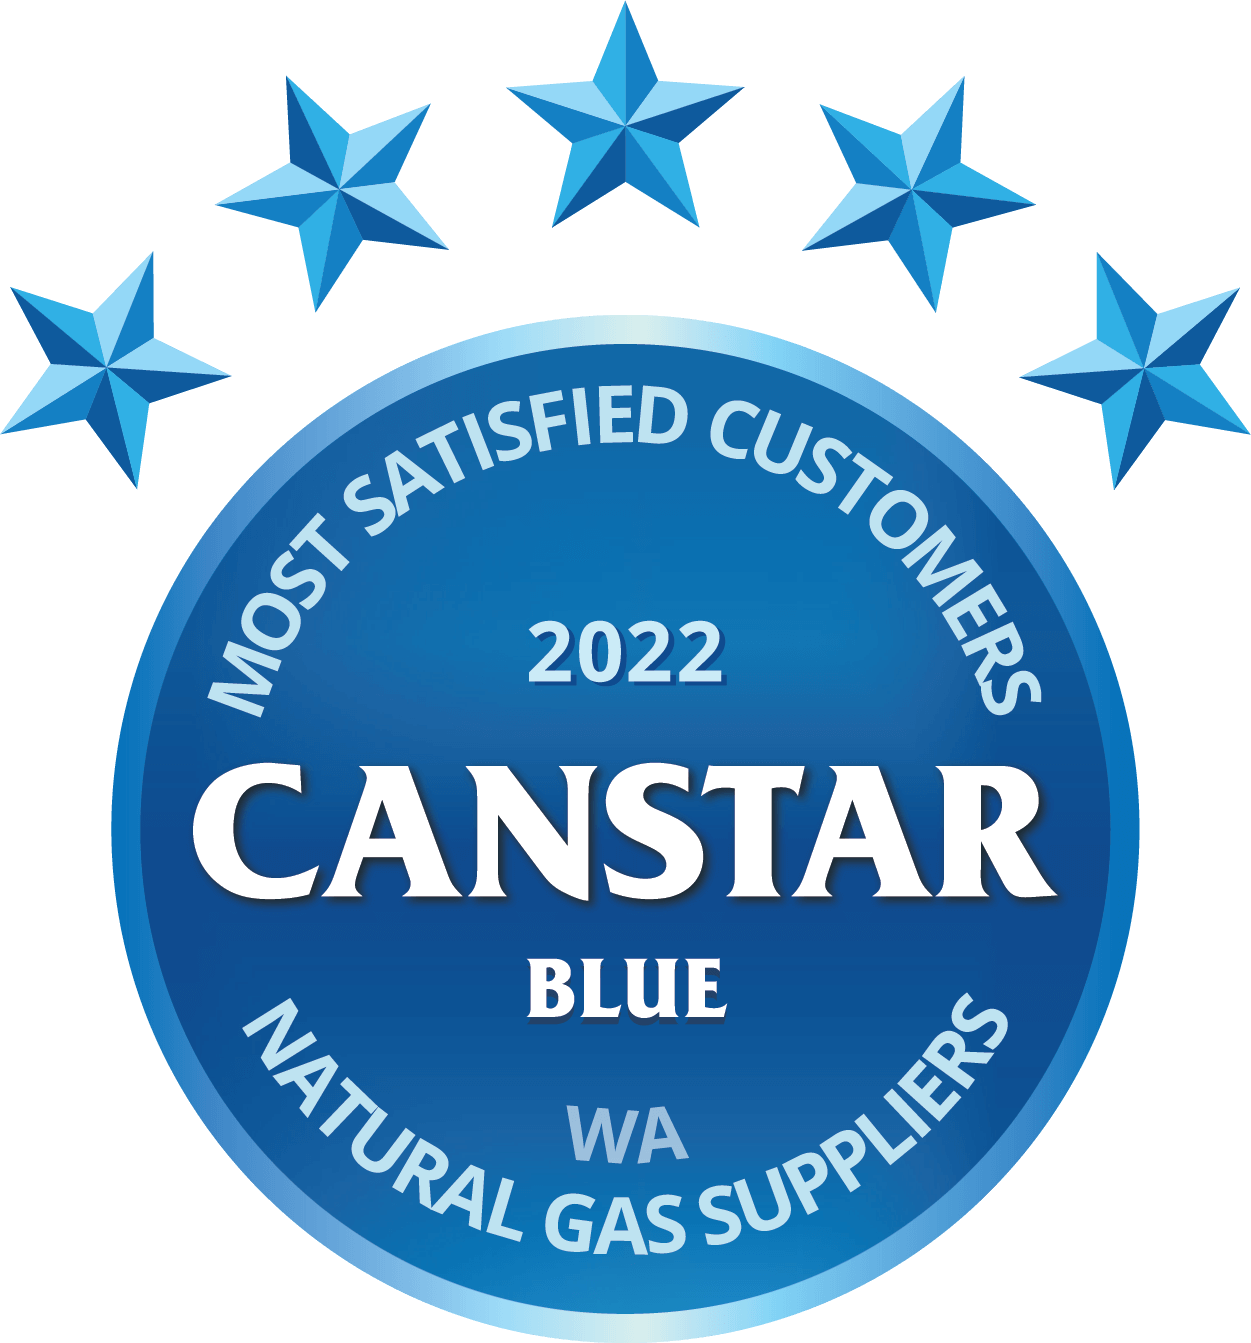 2022 Most satisfied customers WA award